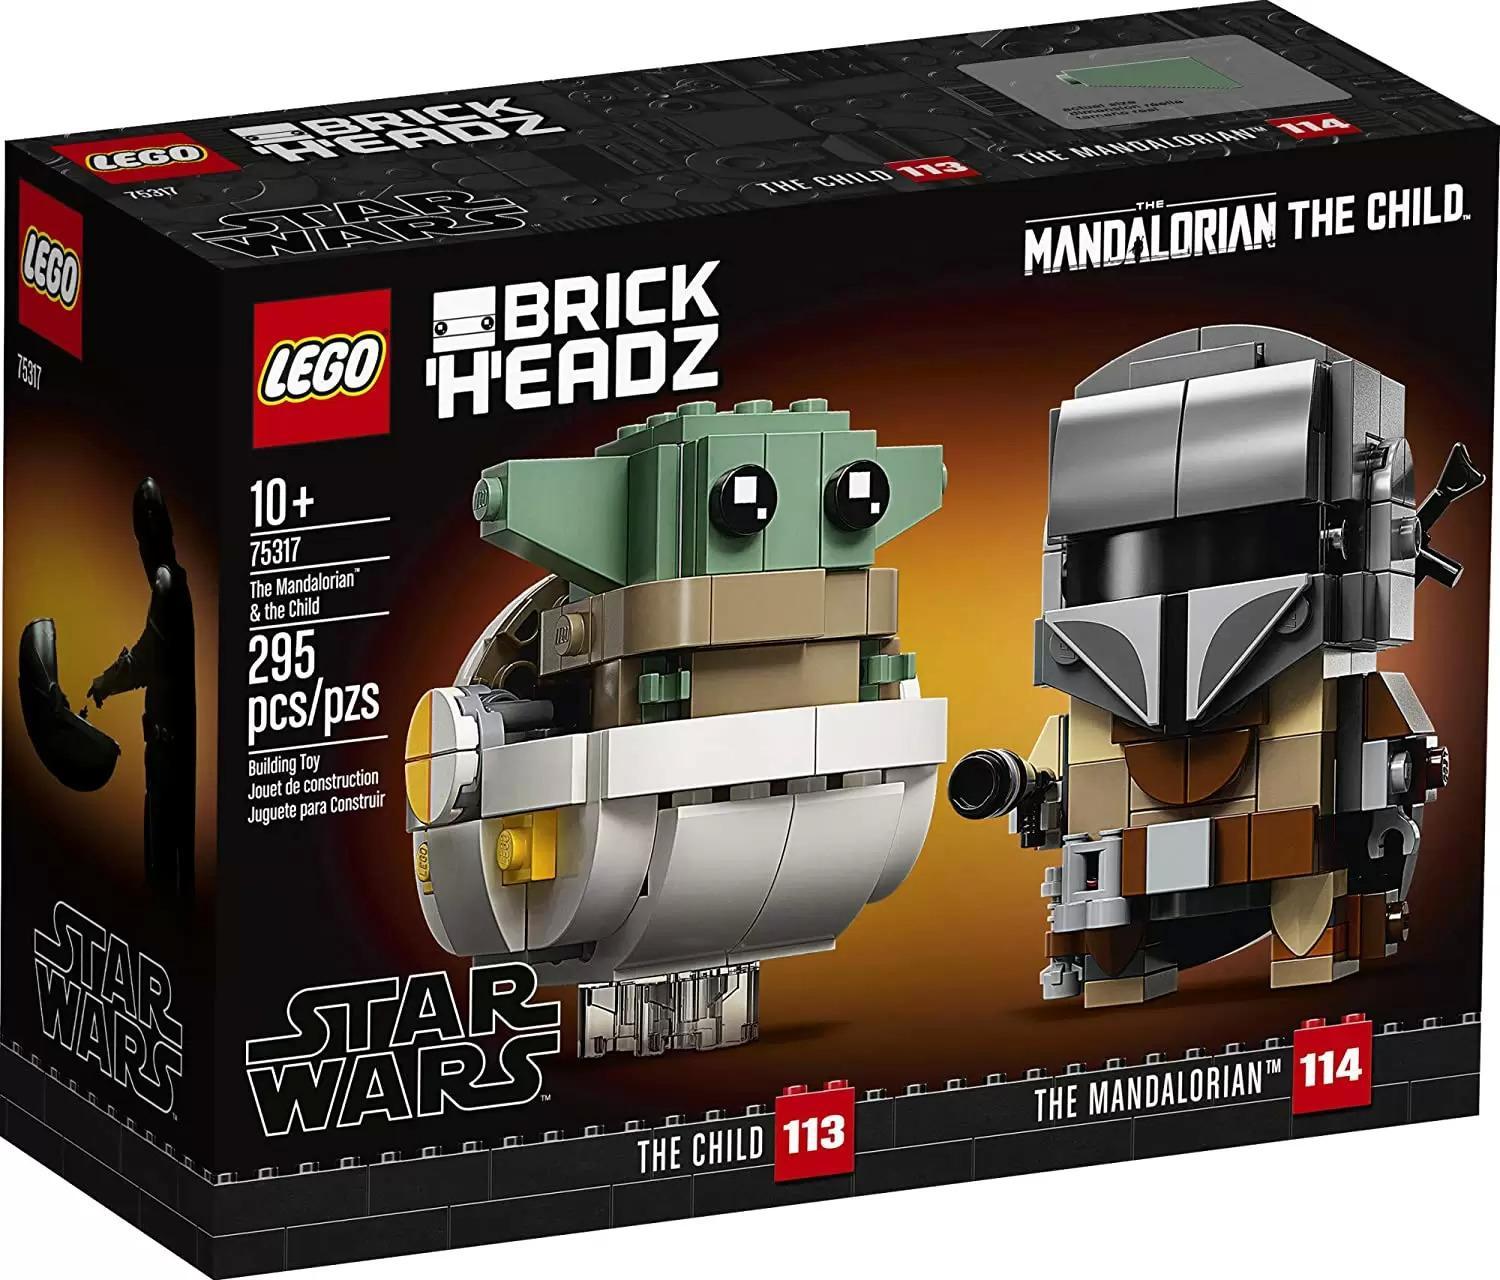 295-Piece LEGO BrickHeadz Star Wars The Mandalorian for $11.99